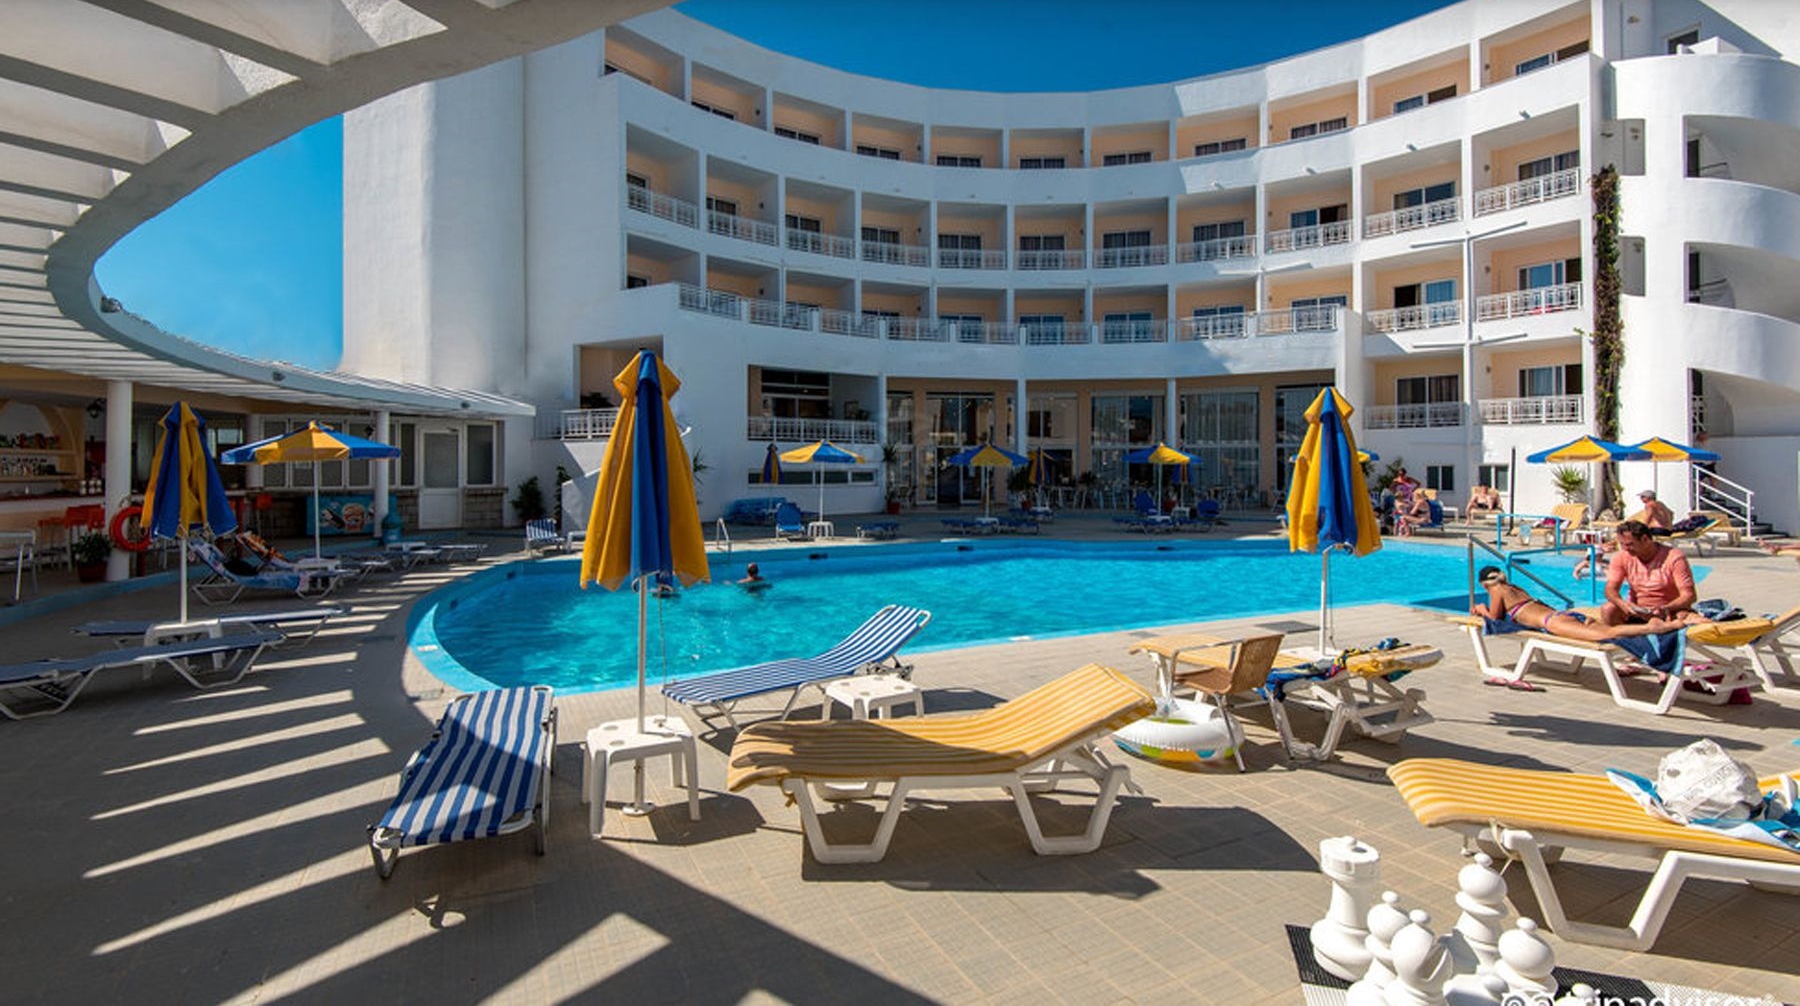 Cleopatra Kris Mari Hotel - Καρδάμαινα, Κως ✦ 2 Ημέρες (1 Διανυκτέρευση) ✦ 2 άτομα ✦ Πρωινό ✦ 01/05/2022 έως 30/09/2022 ✦ Κοντά σε Παραλία!